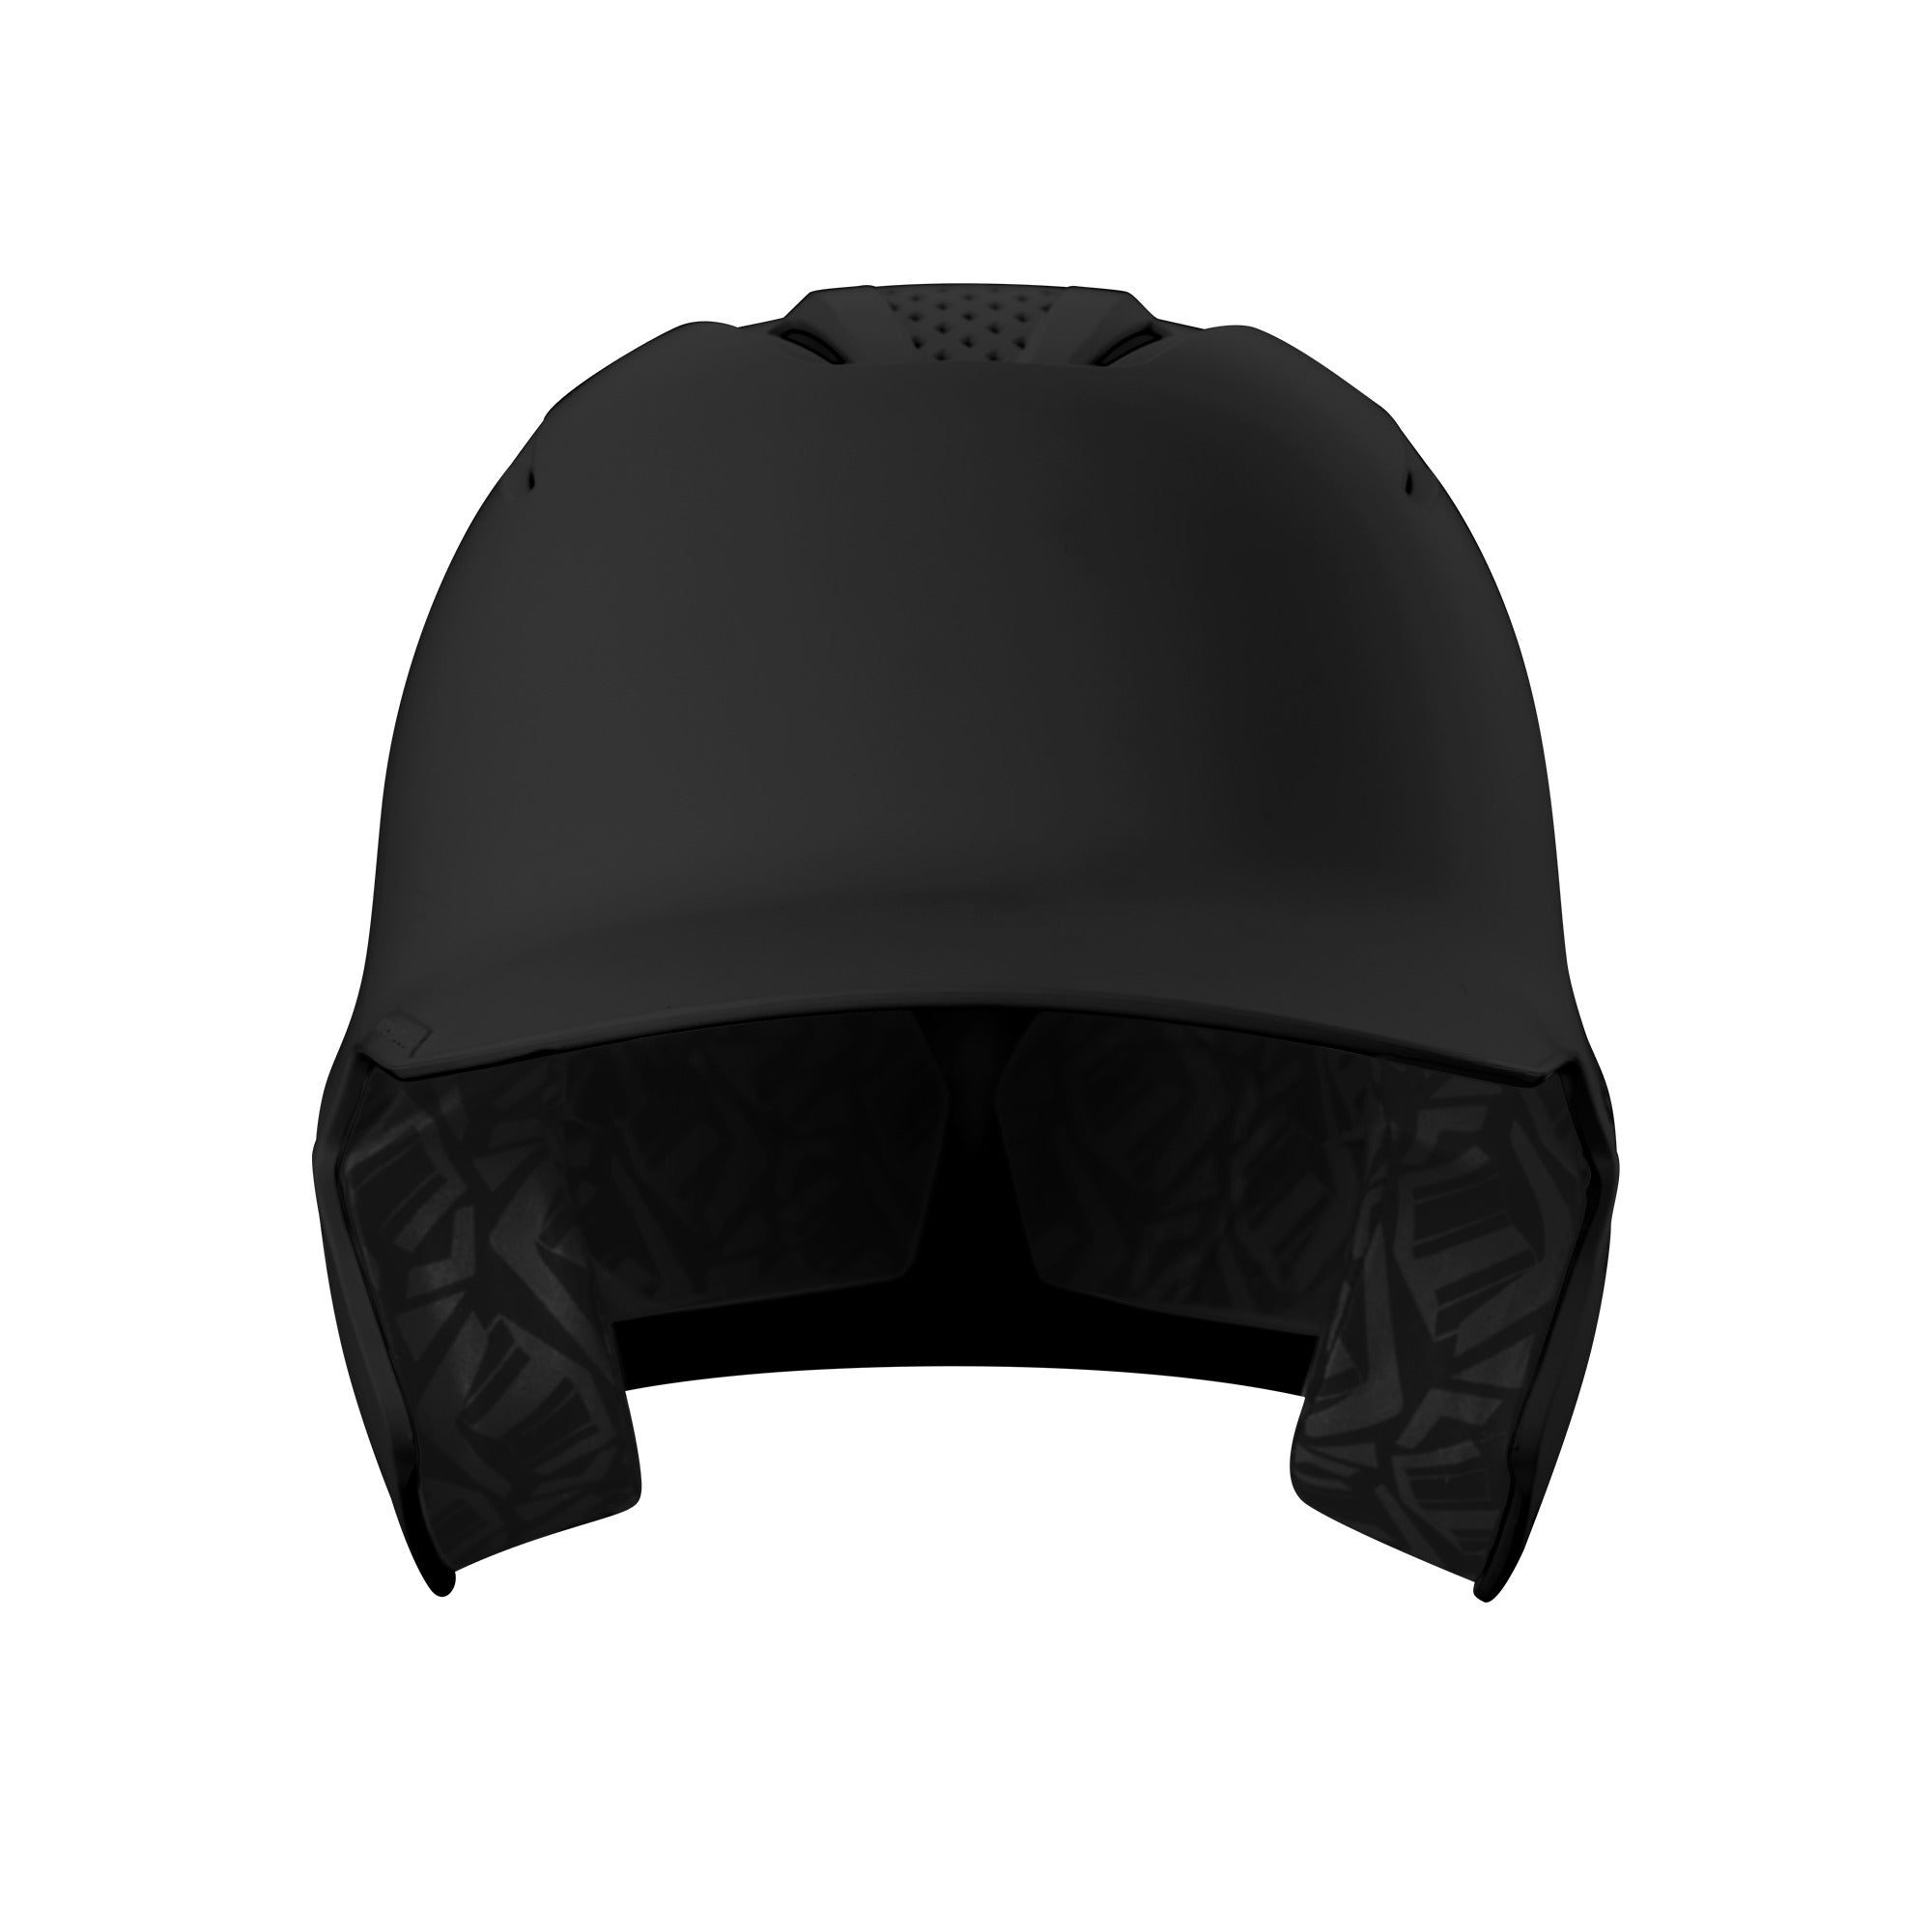 Evoshield XVT 2.0 Matte Batting Helmet Black